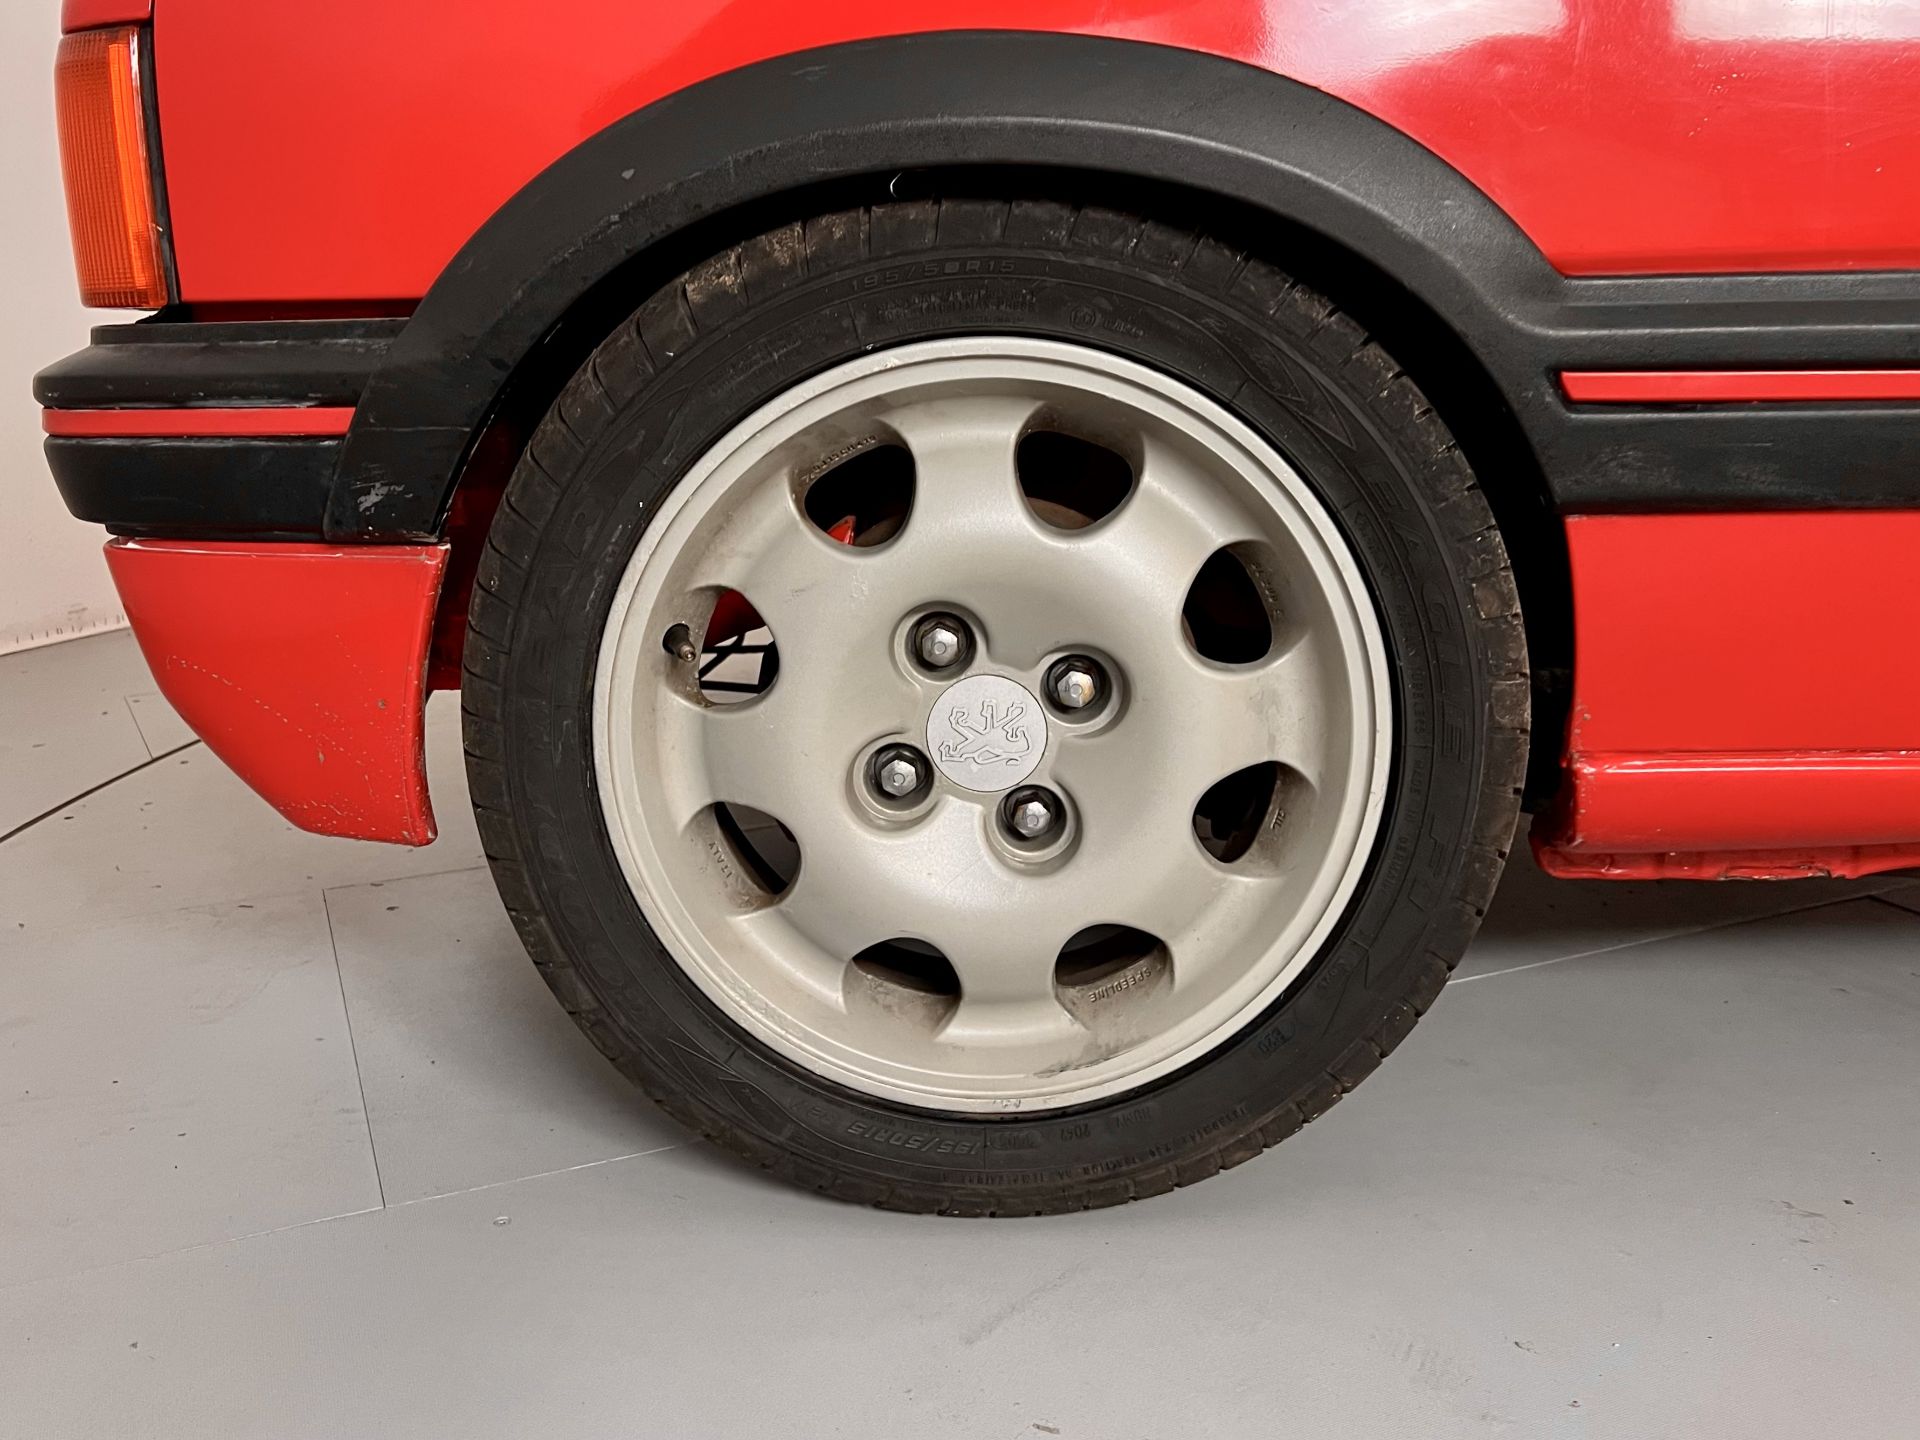 Peugeot 205 GTI 1.9 - Image 14 of 31